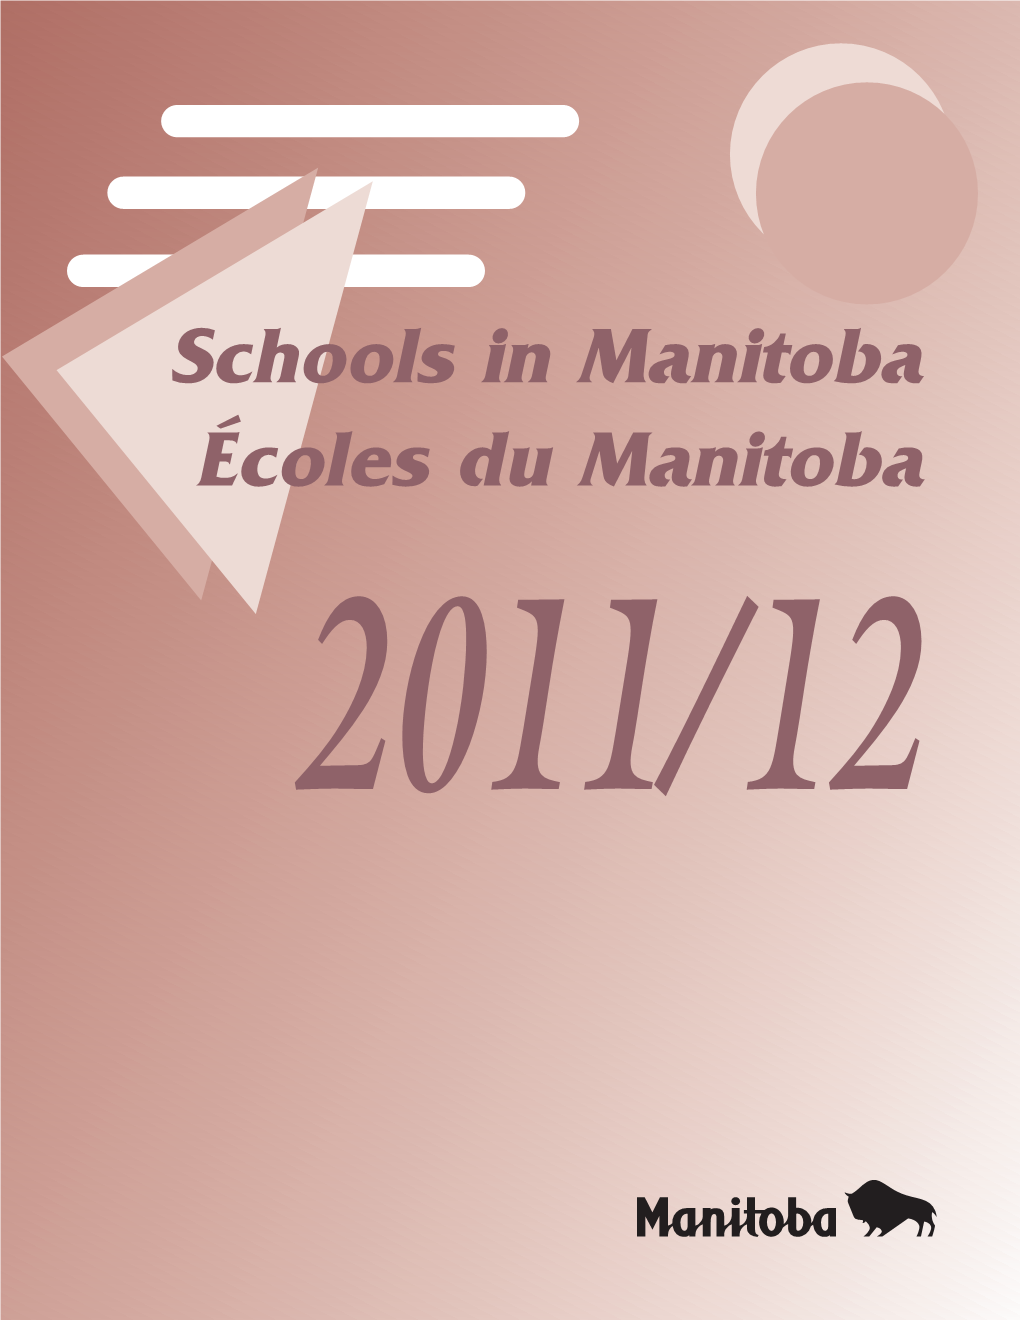 Schools in Manitoba 2011/12